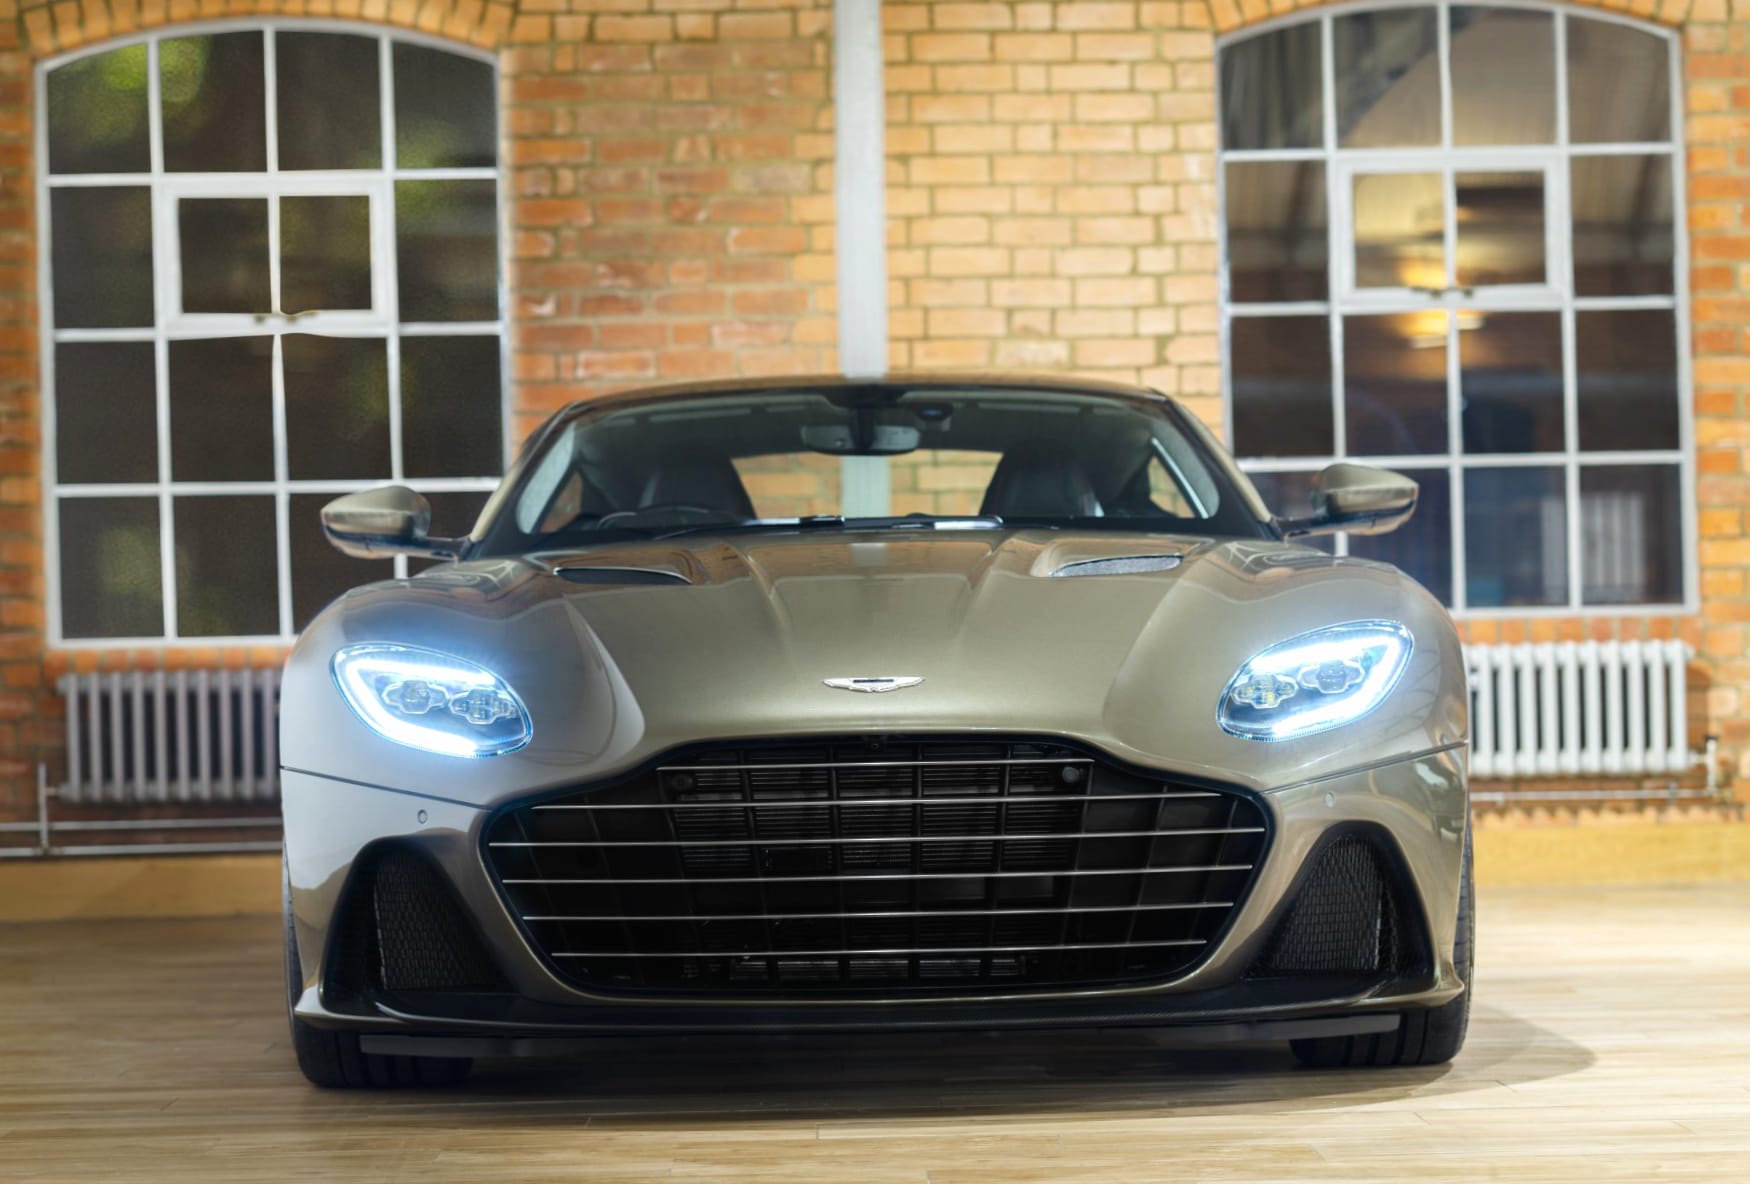 Aston Martin DBS Superleggera at 320 x 480 iPhone size wallpapers HD quality